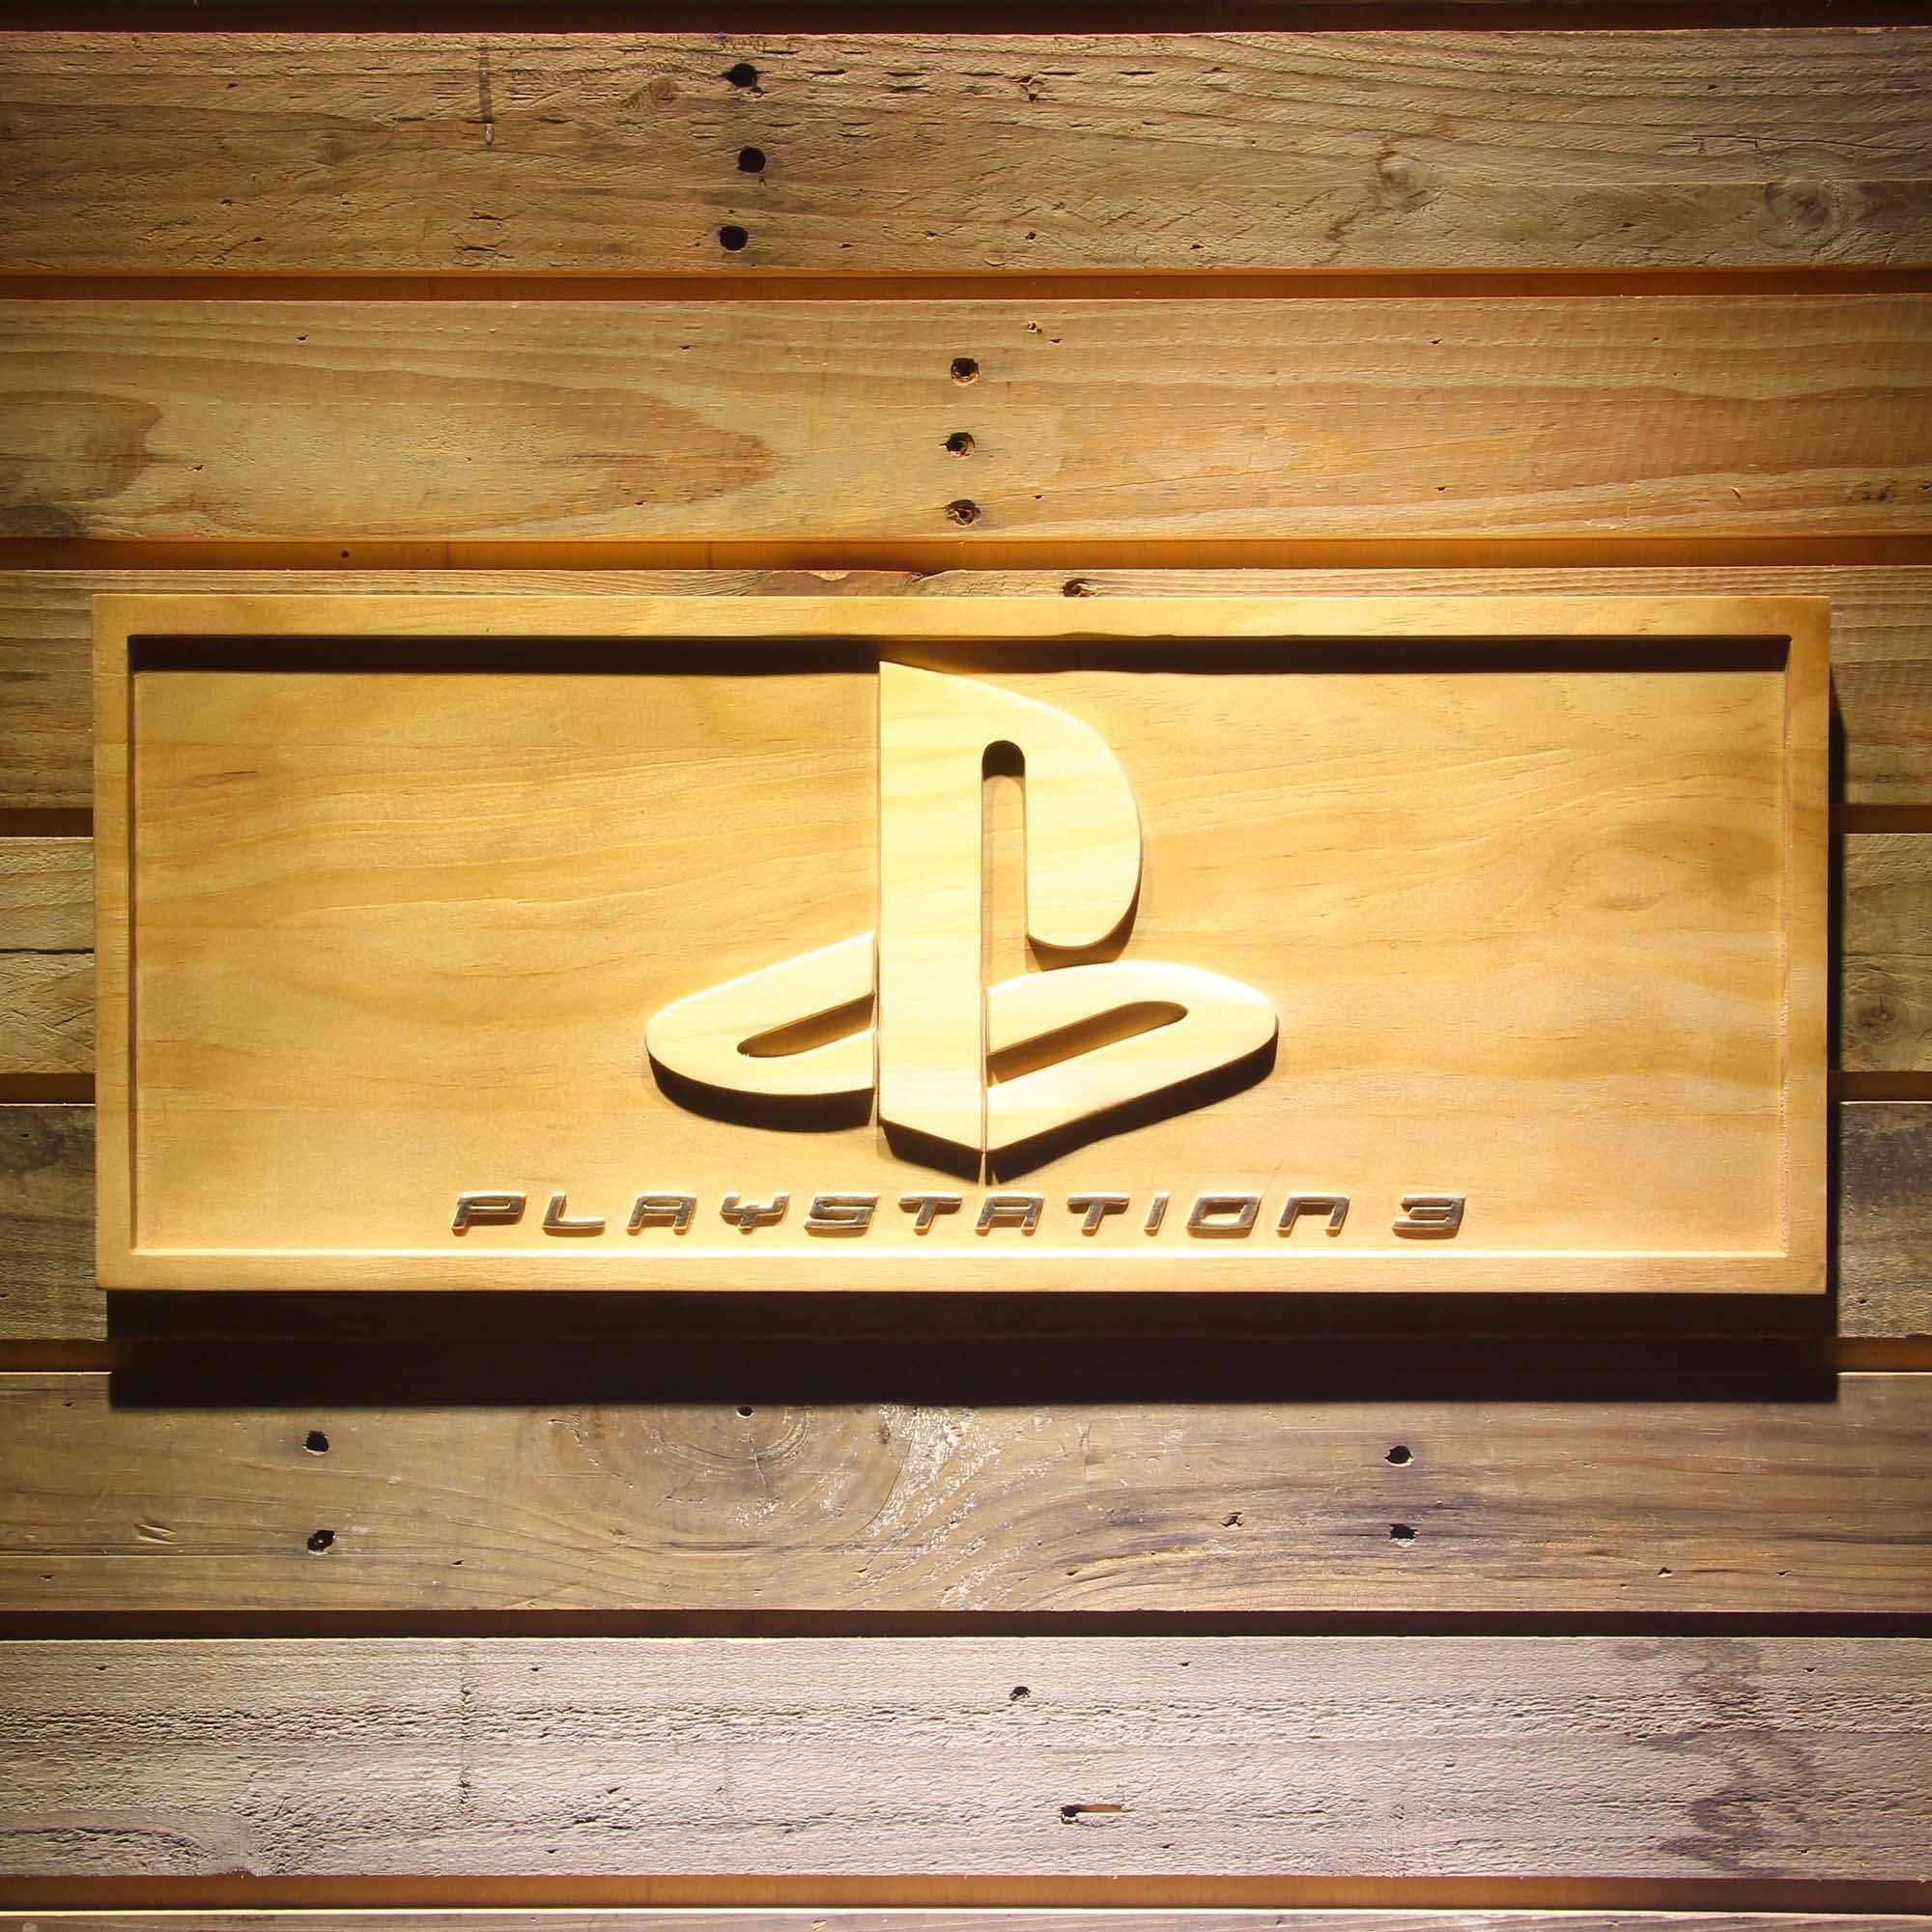 Playstation 3 Game Room 3D Wooden Engrave Sign